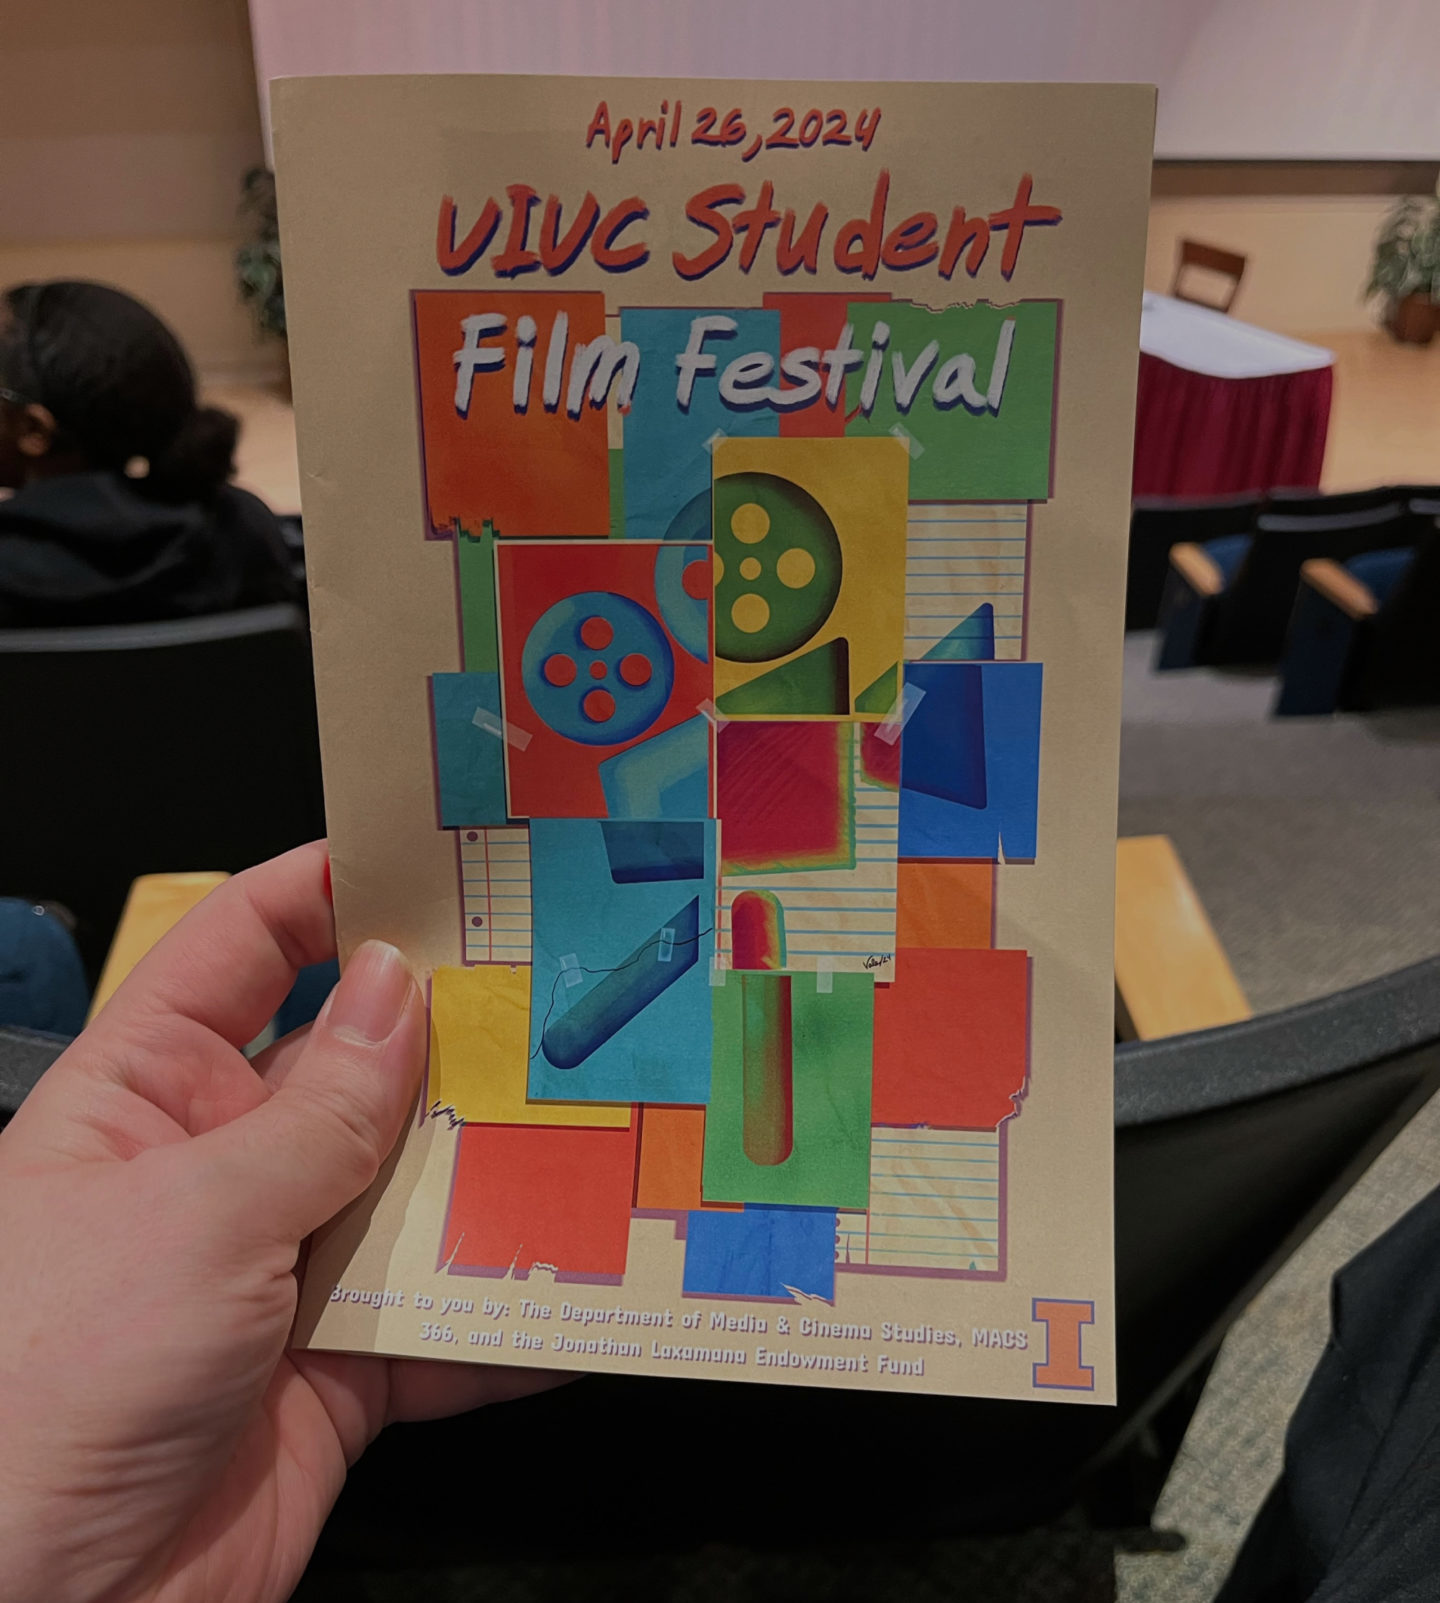 University of Illinois student film festival showcases diverse artists